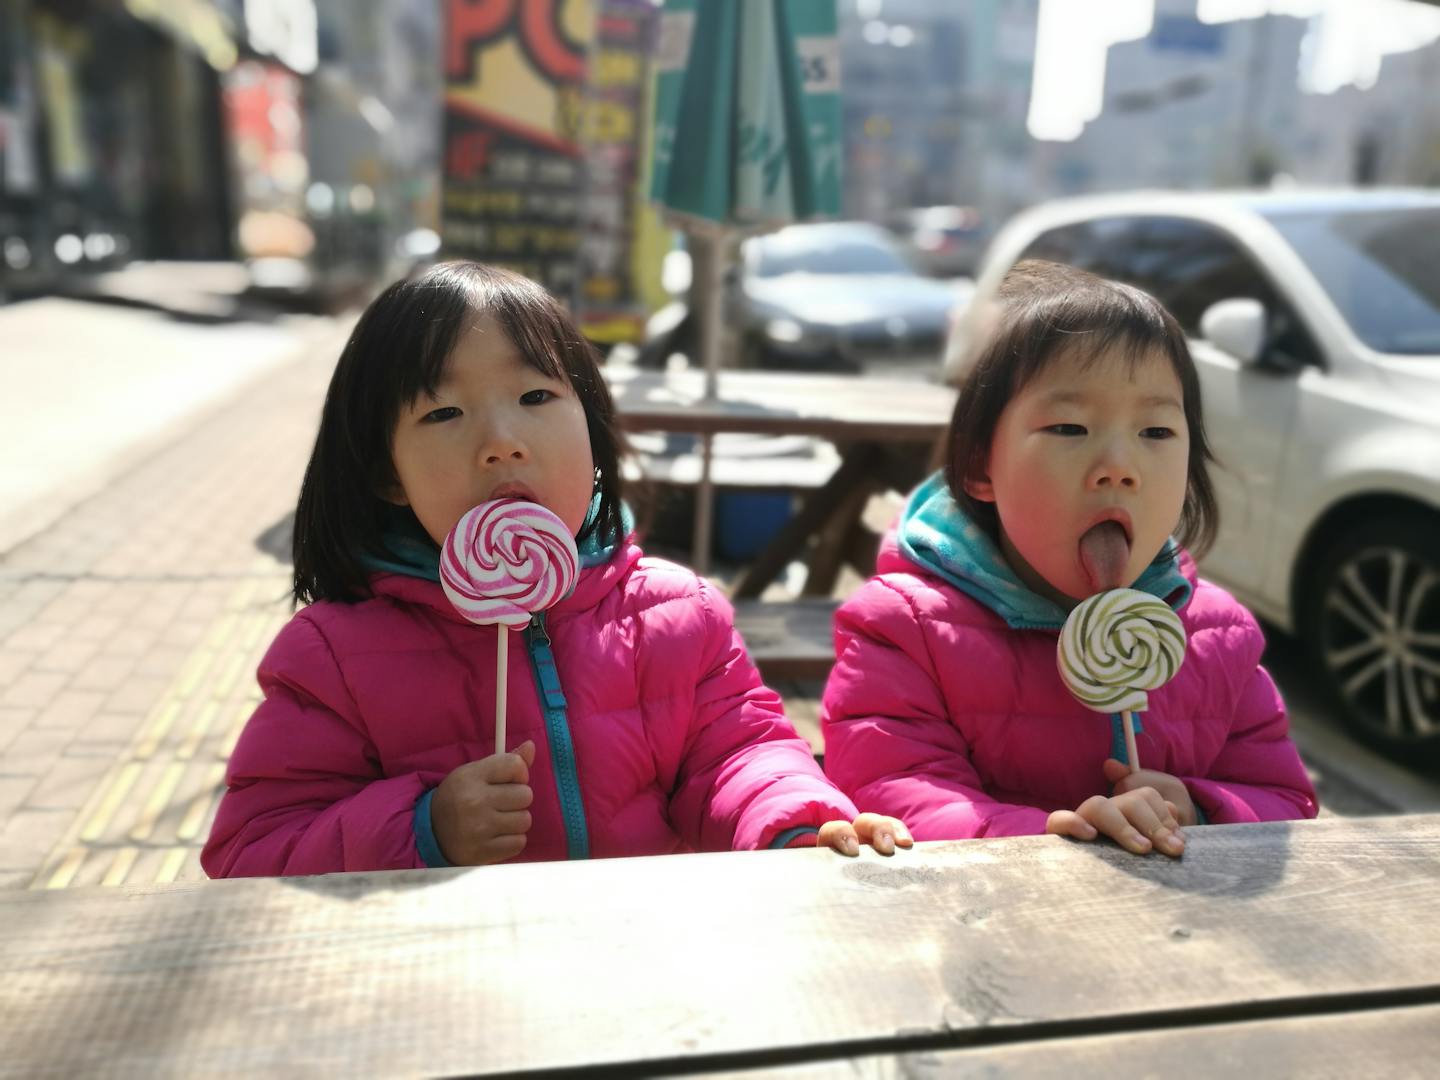 Two girls licking lollipops.